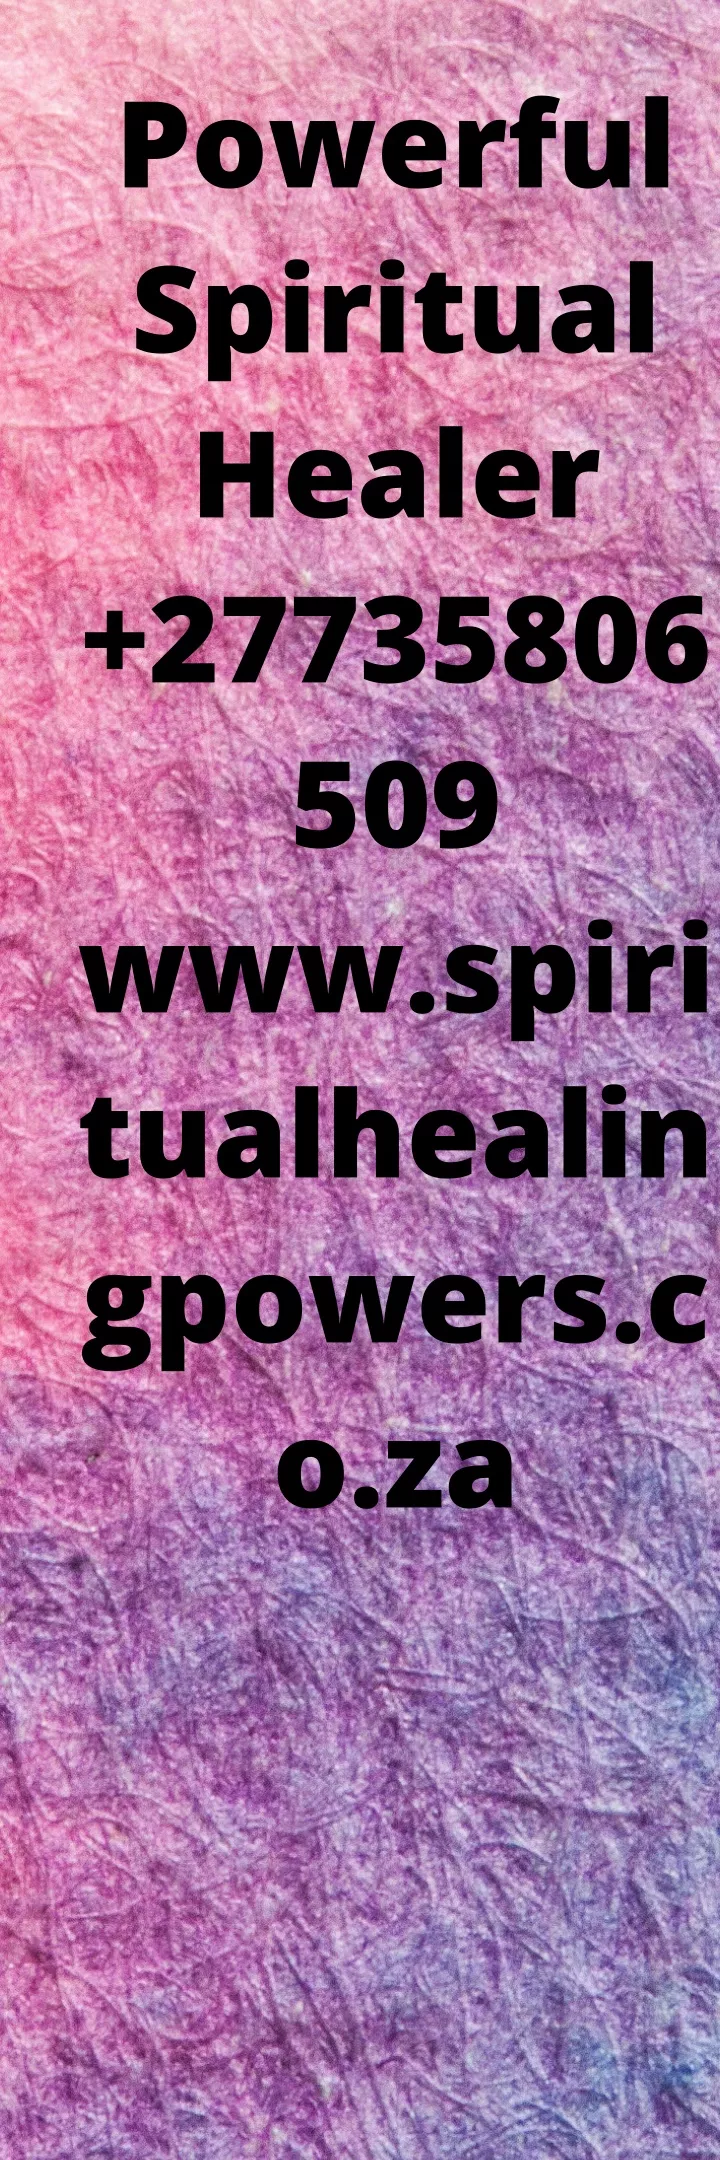 powerful spiritual healer 27735806 509 www spiri